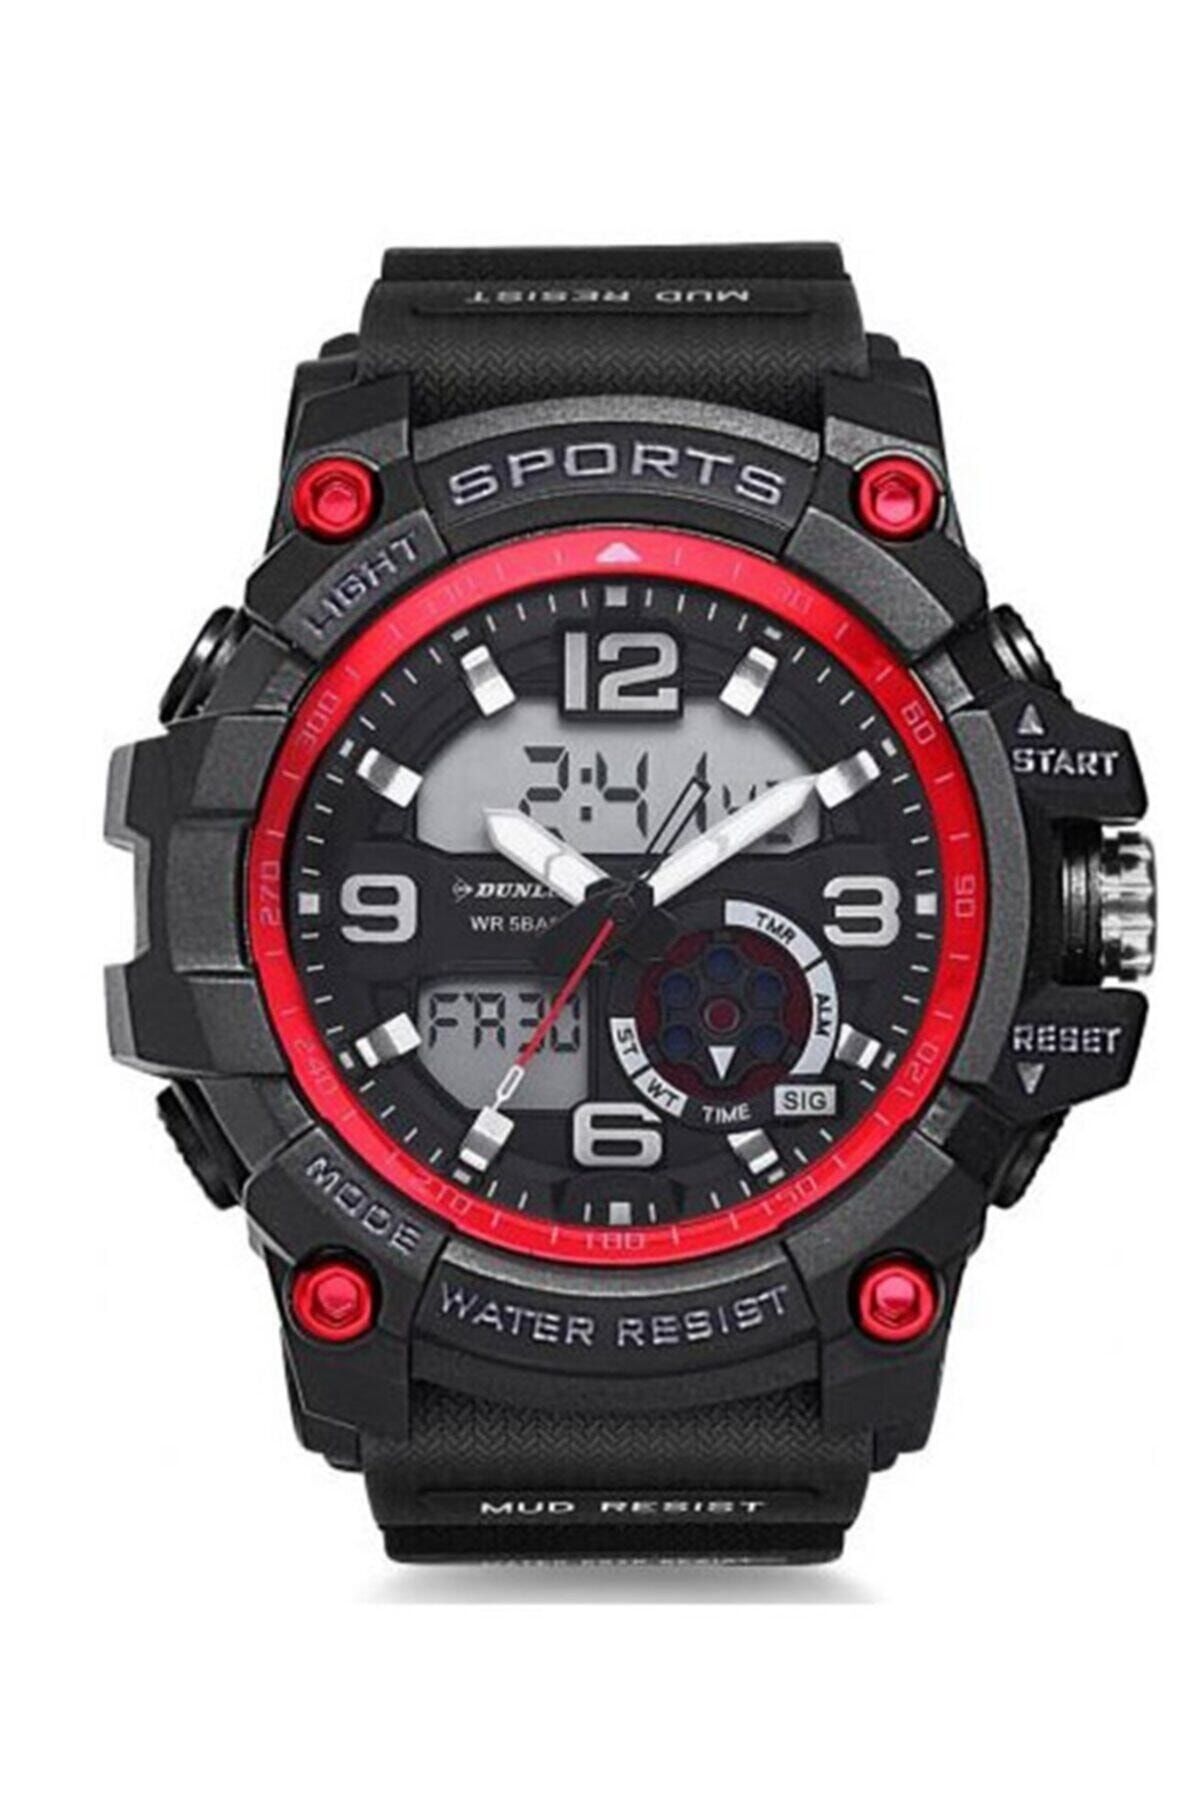 Dunlop Erkek Kol Saati Siyah Kırmızı Dun-339-g08